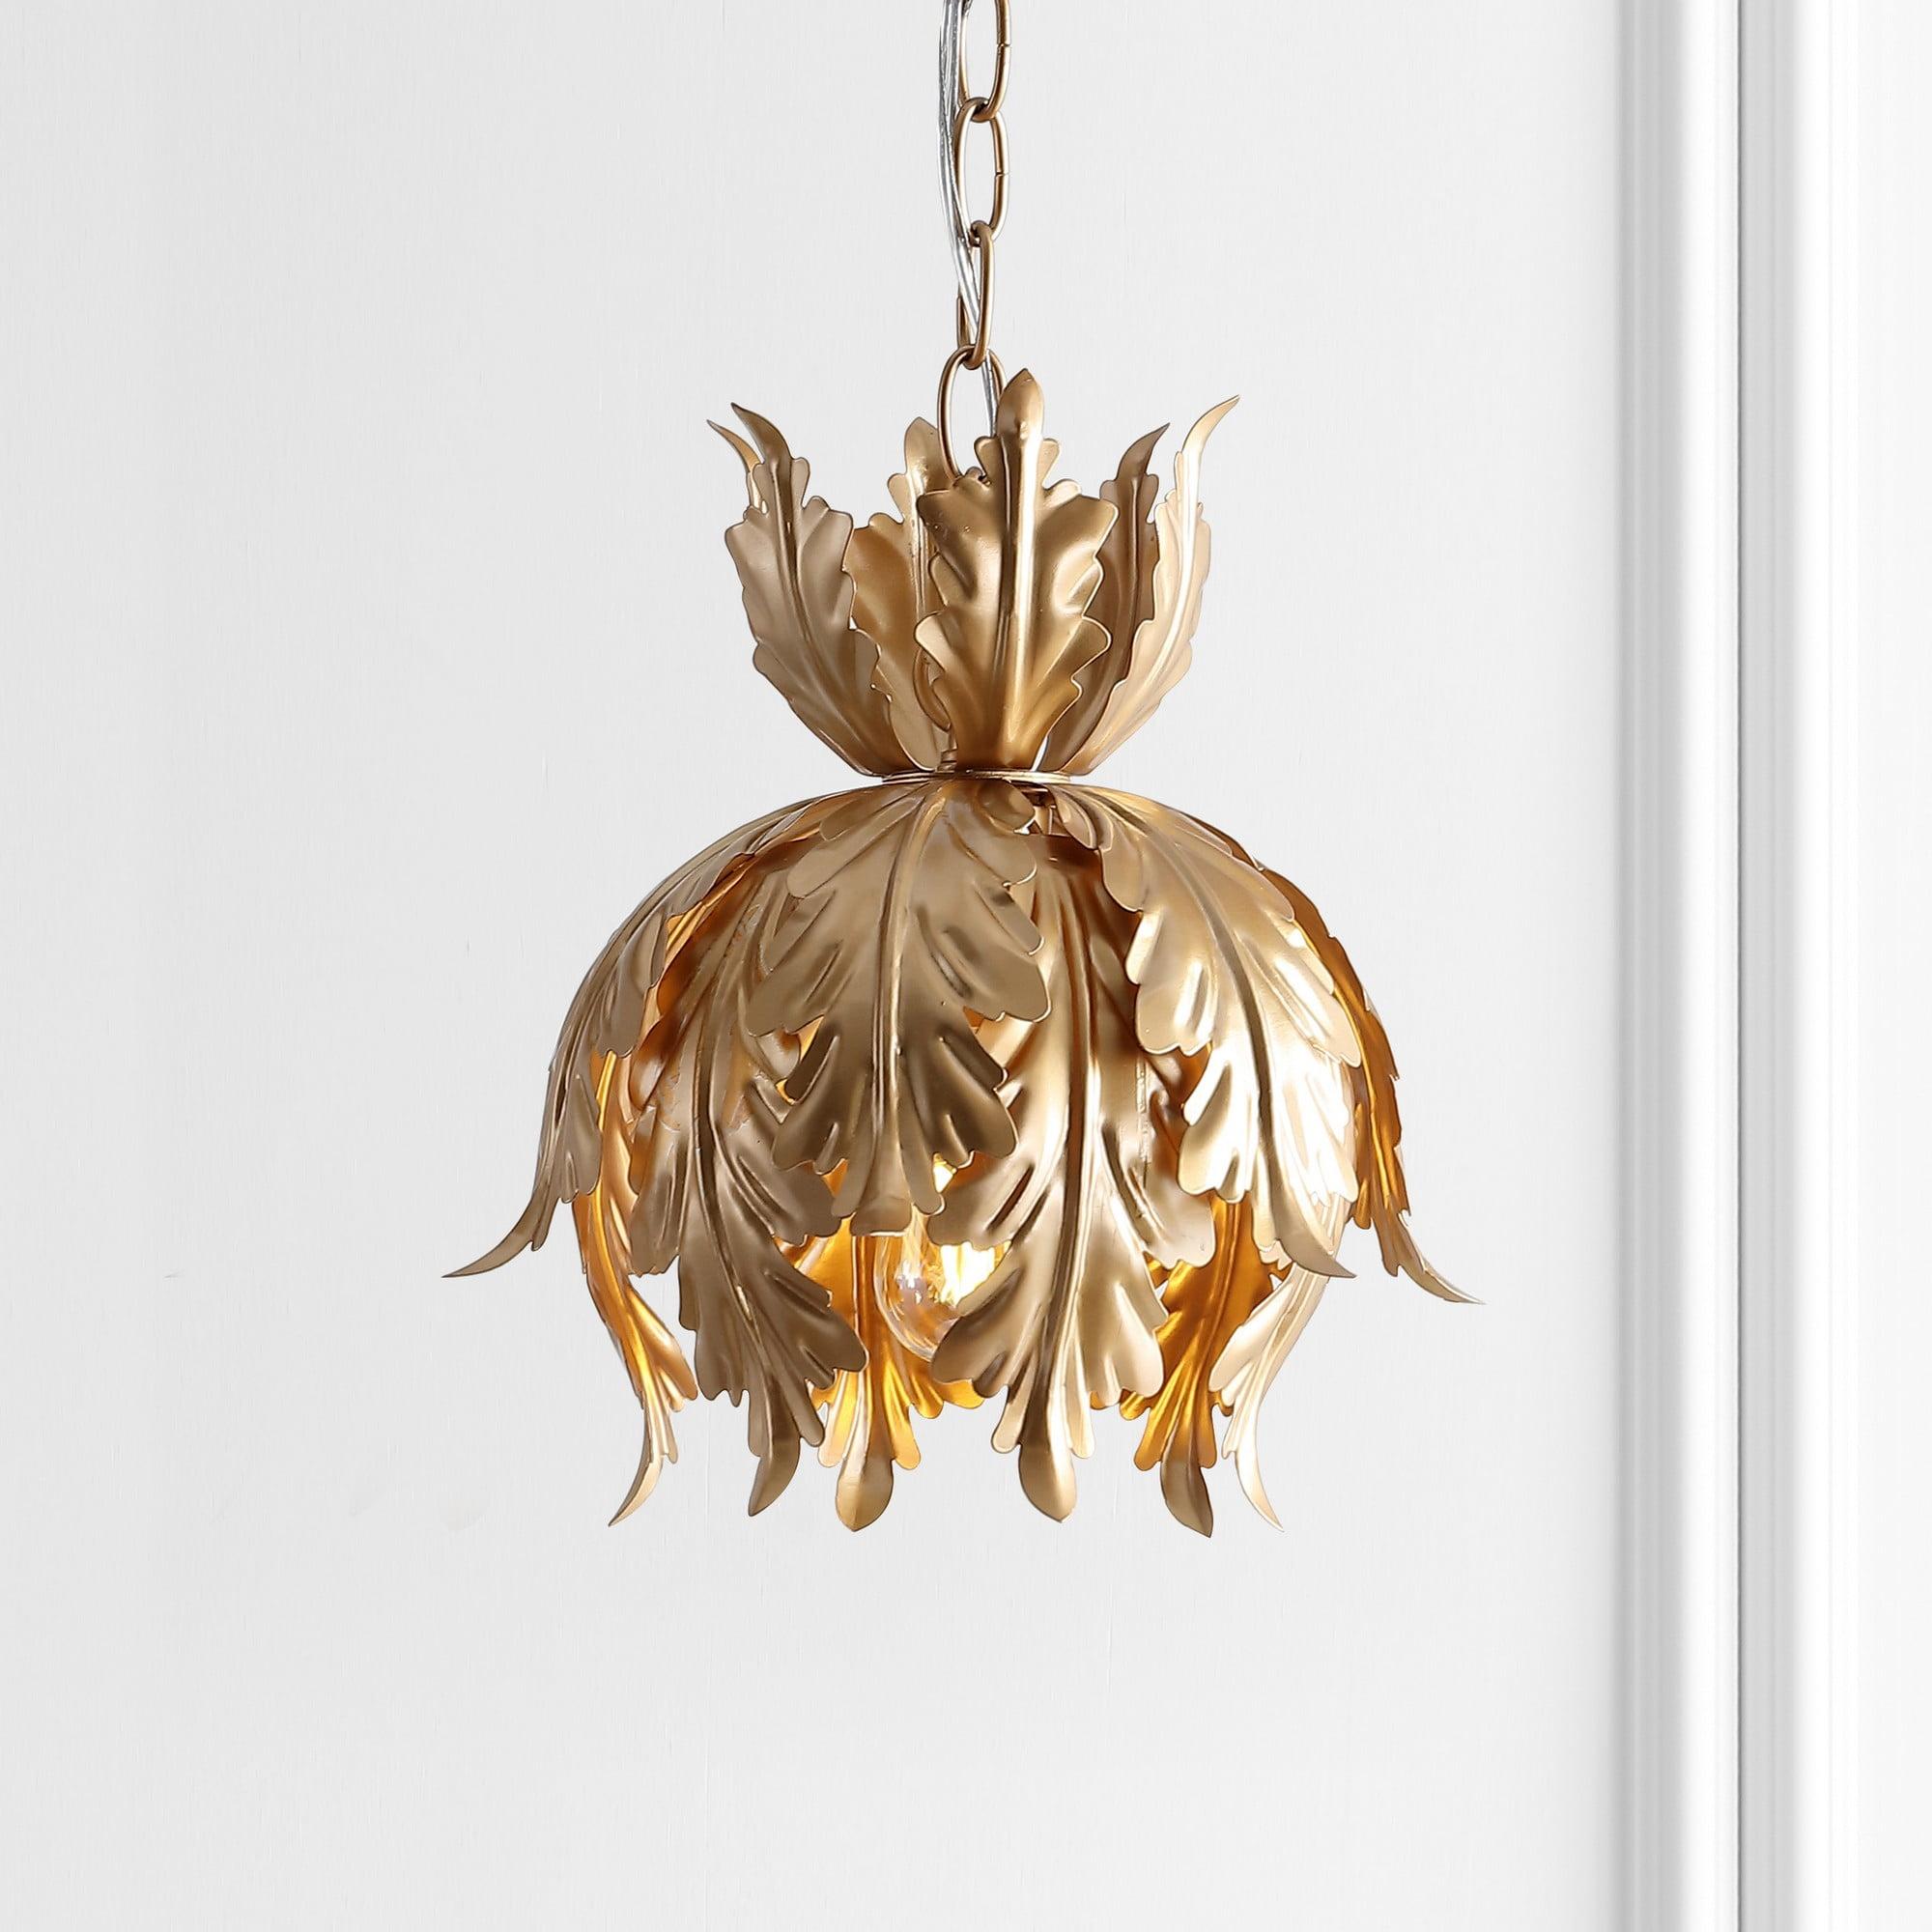 Elegant 12" Gold Adjustable LED Pendant - Contemporary Geometric Design